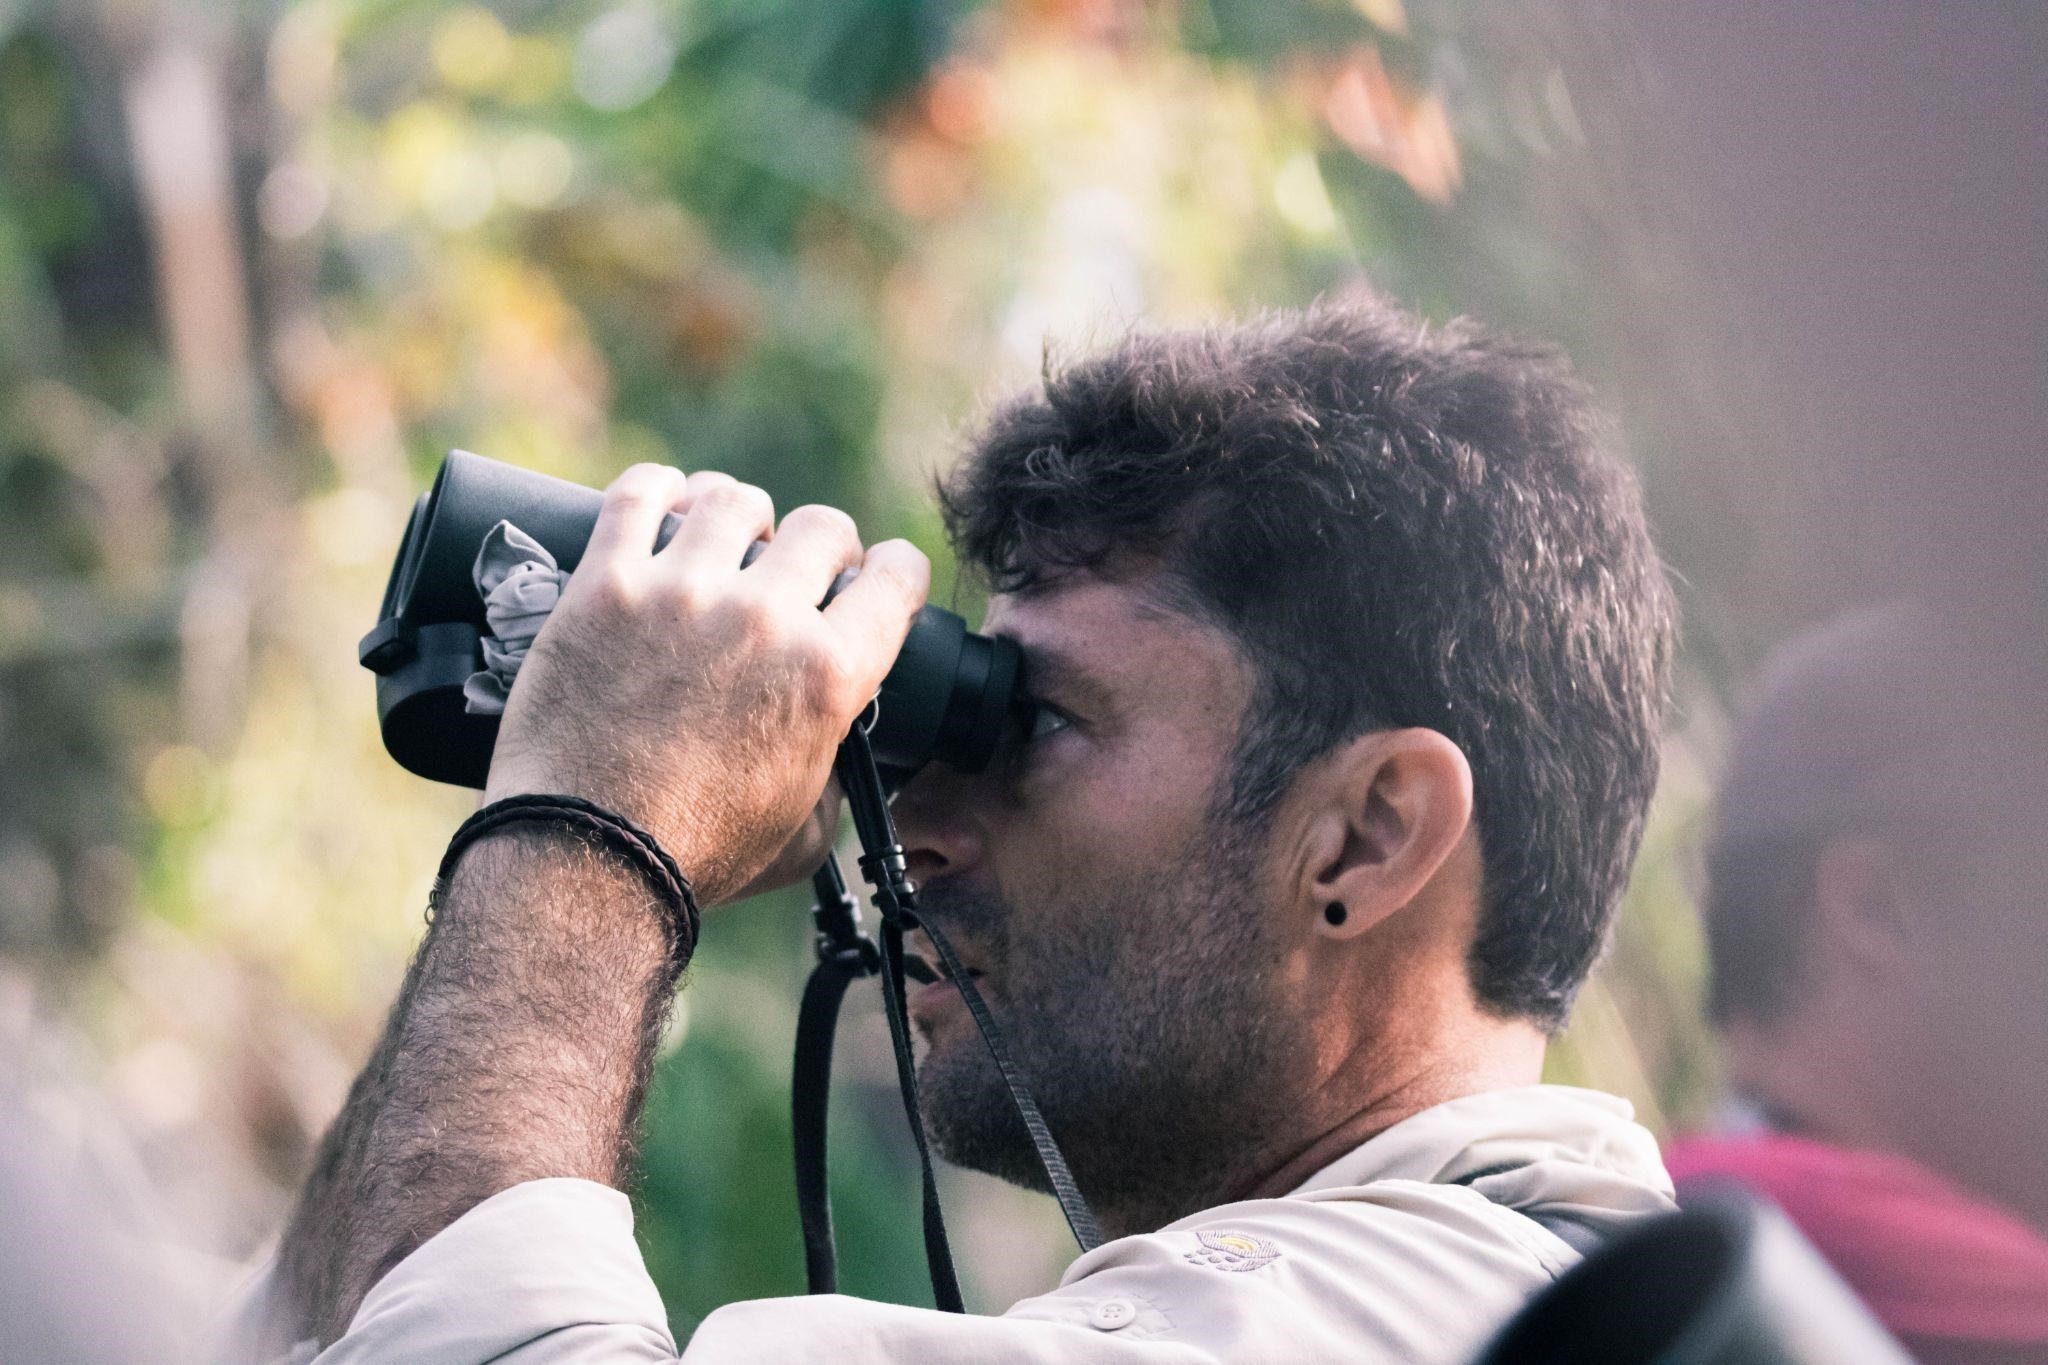 bird watching with binoculars